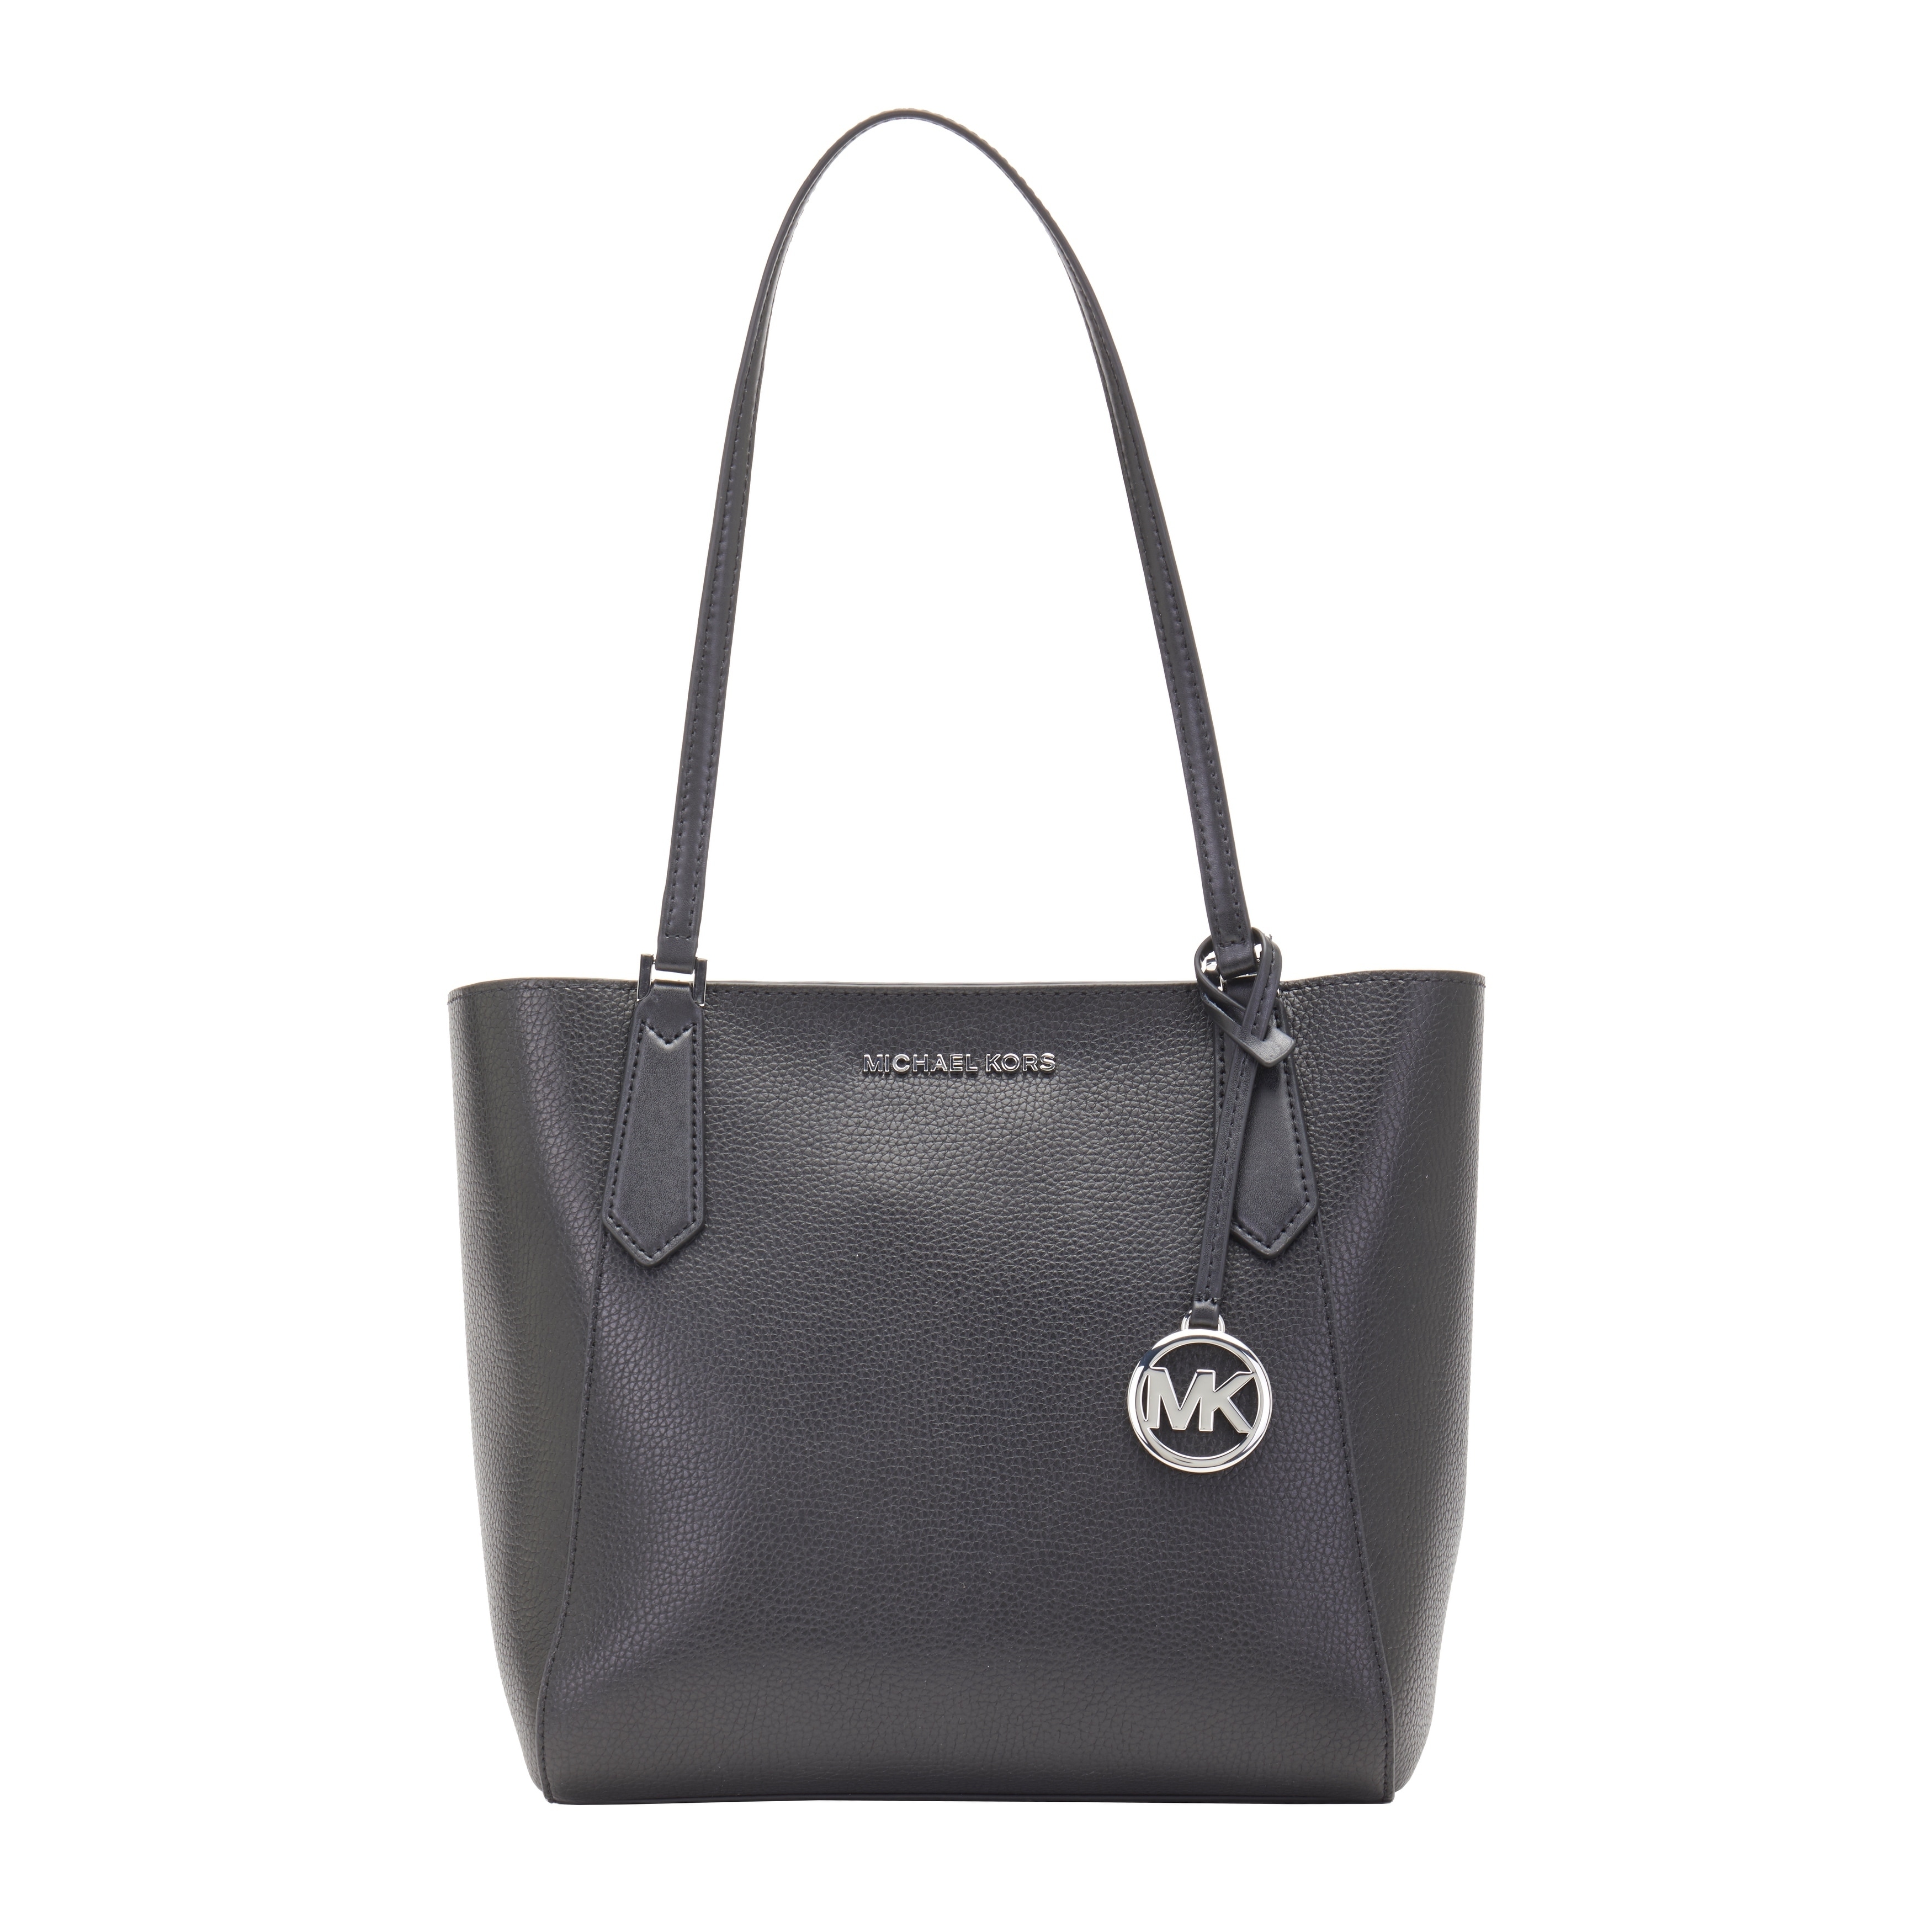 mk handbag black